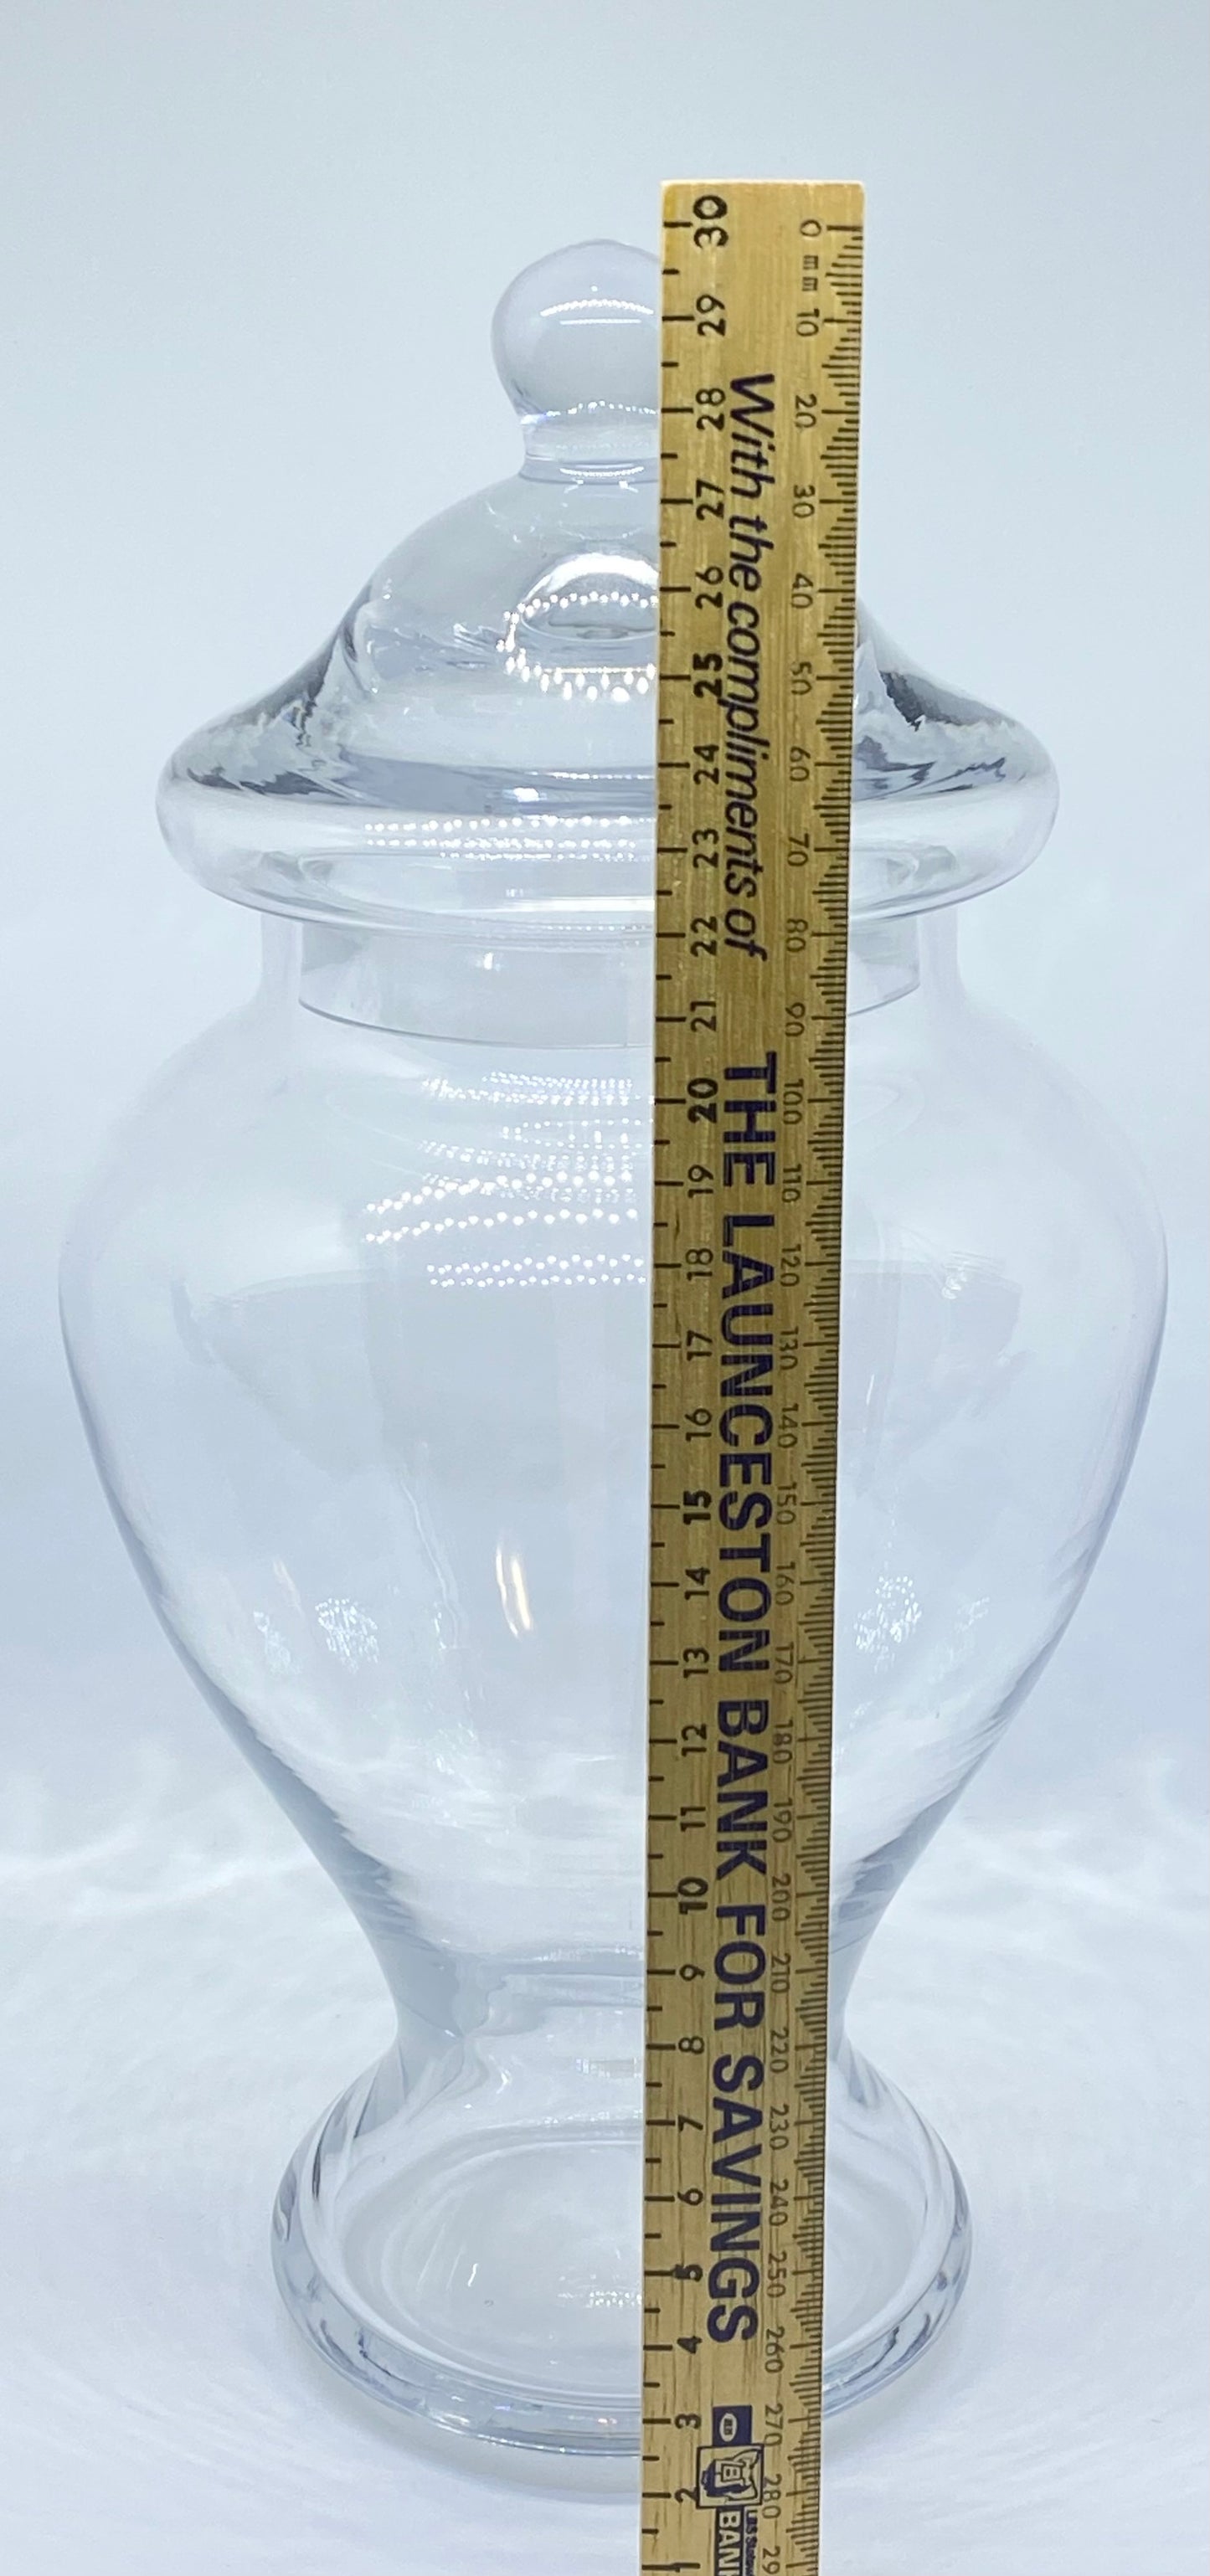 Large Clear Apothecary jar - Polish glass